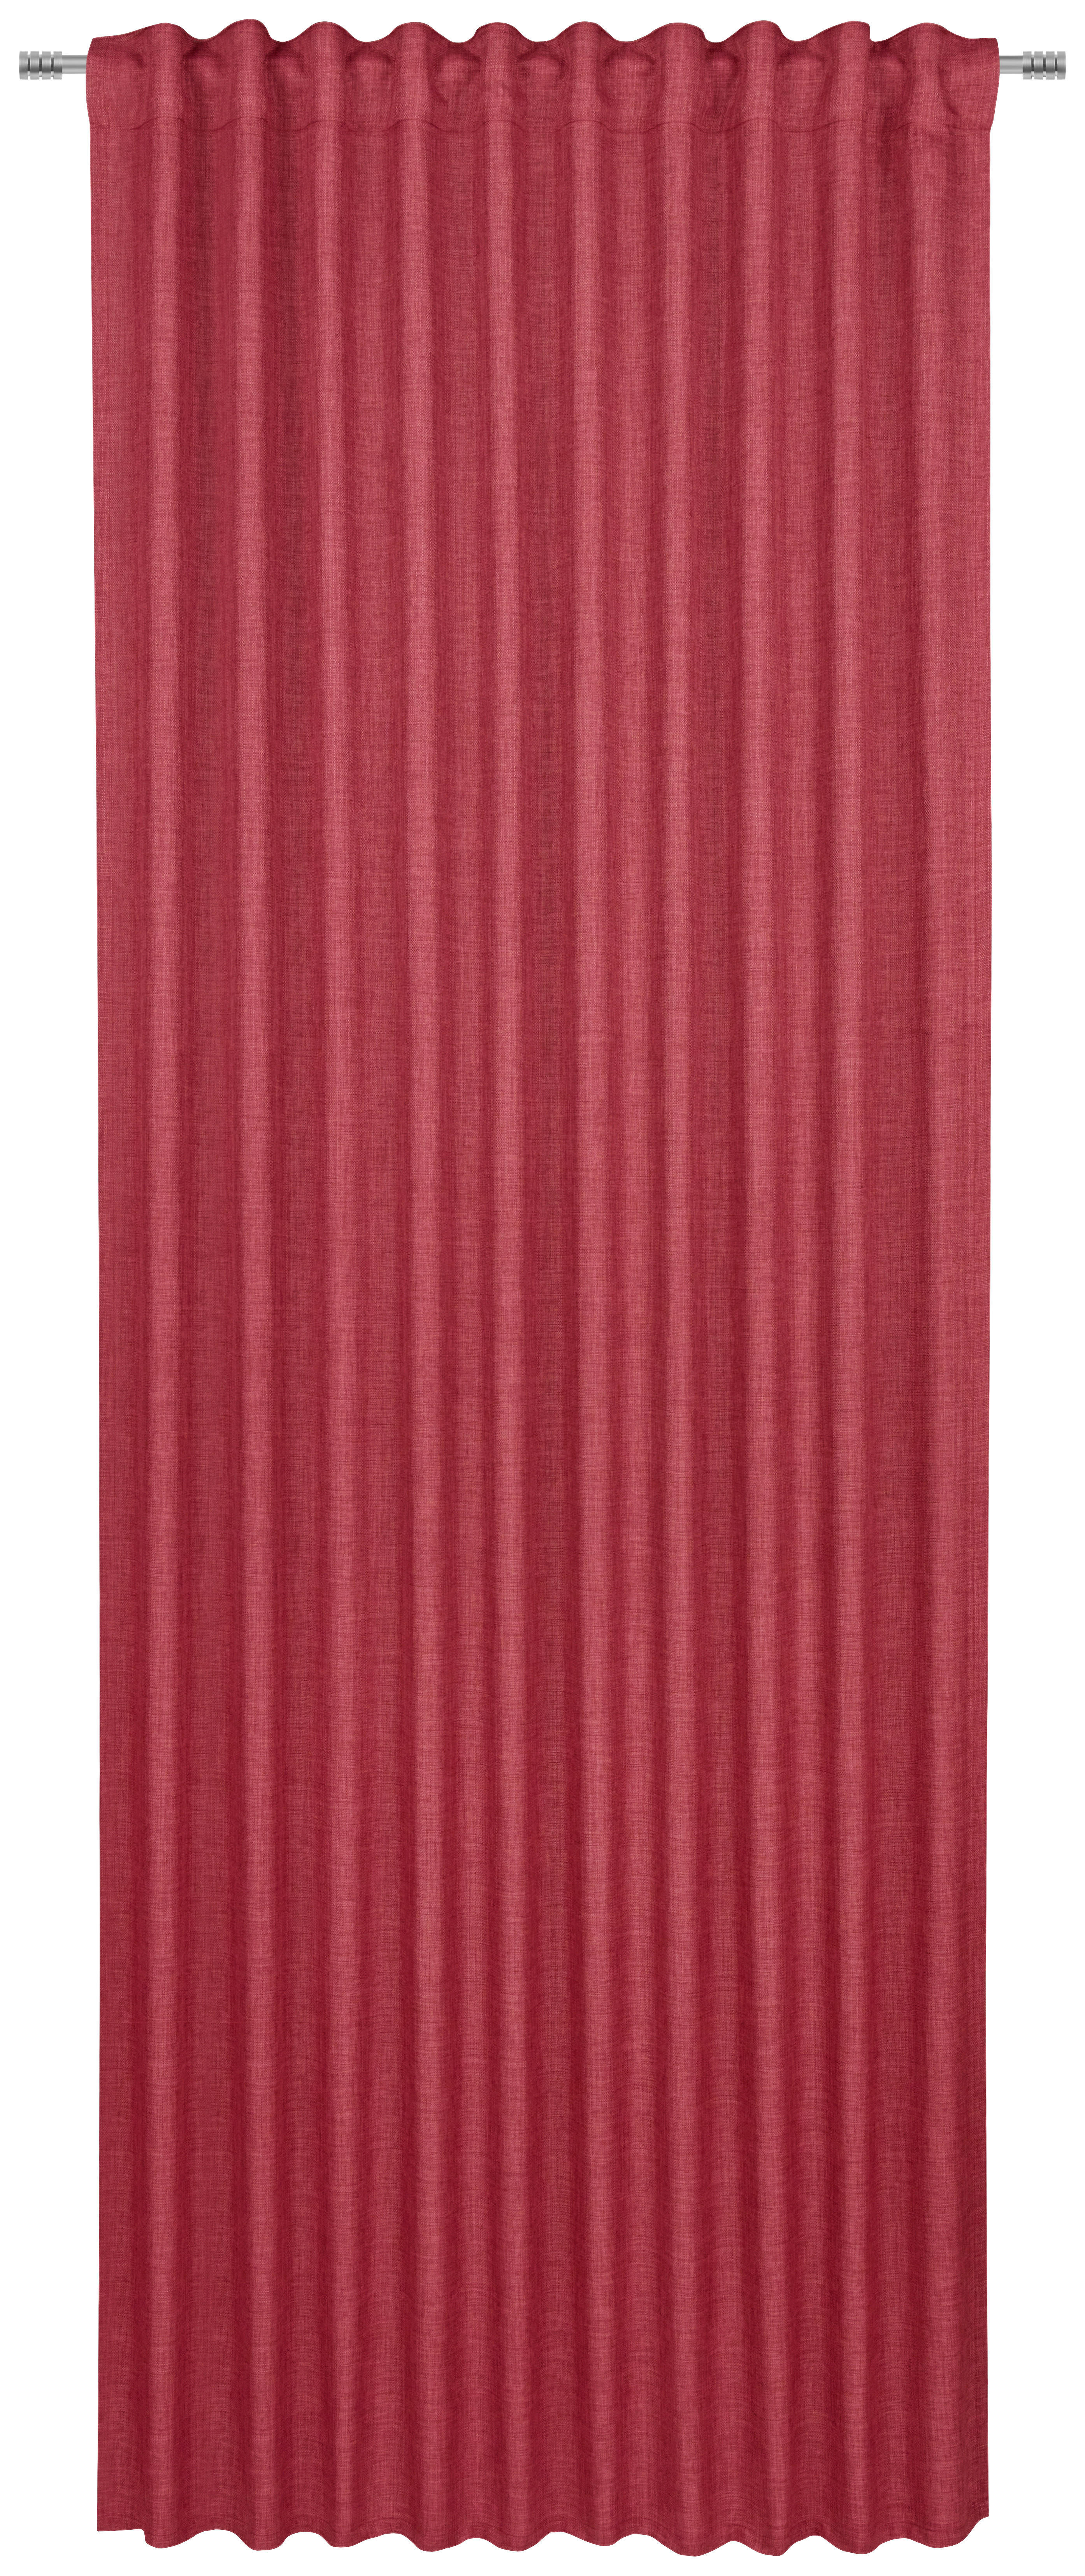 FERTIGVORHANG FREDDY blickdicht 140/245 cm   - Rot, Basics, Textil (140/245cm) - Boxxx